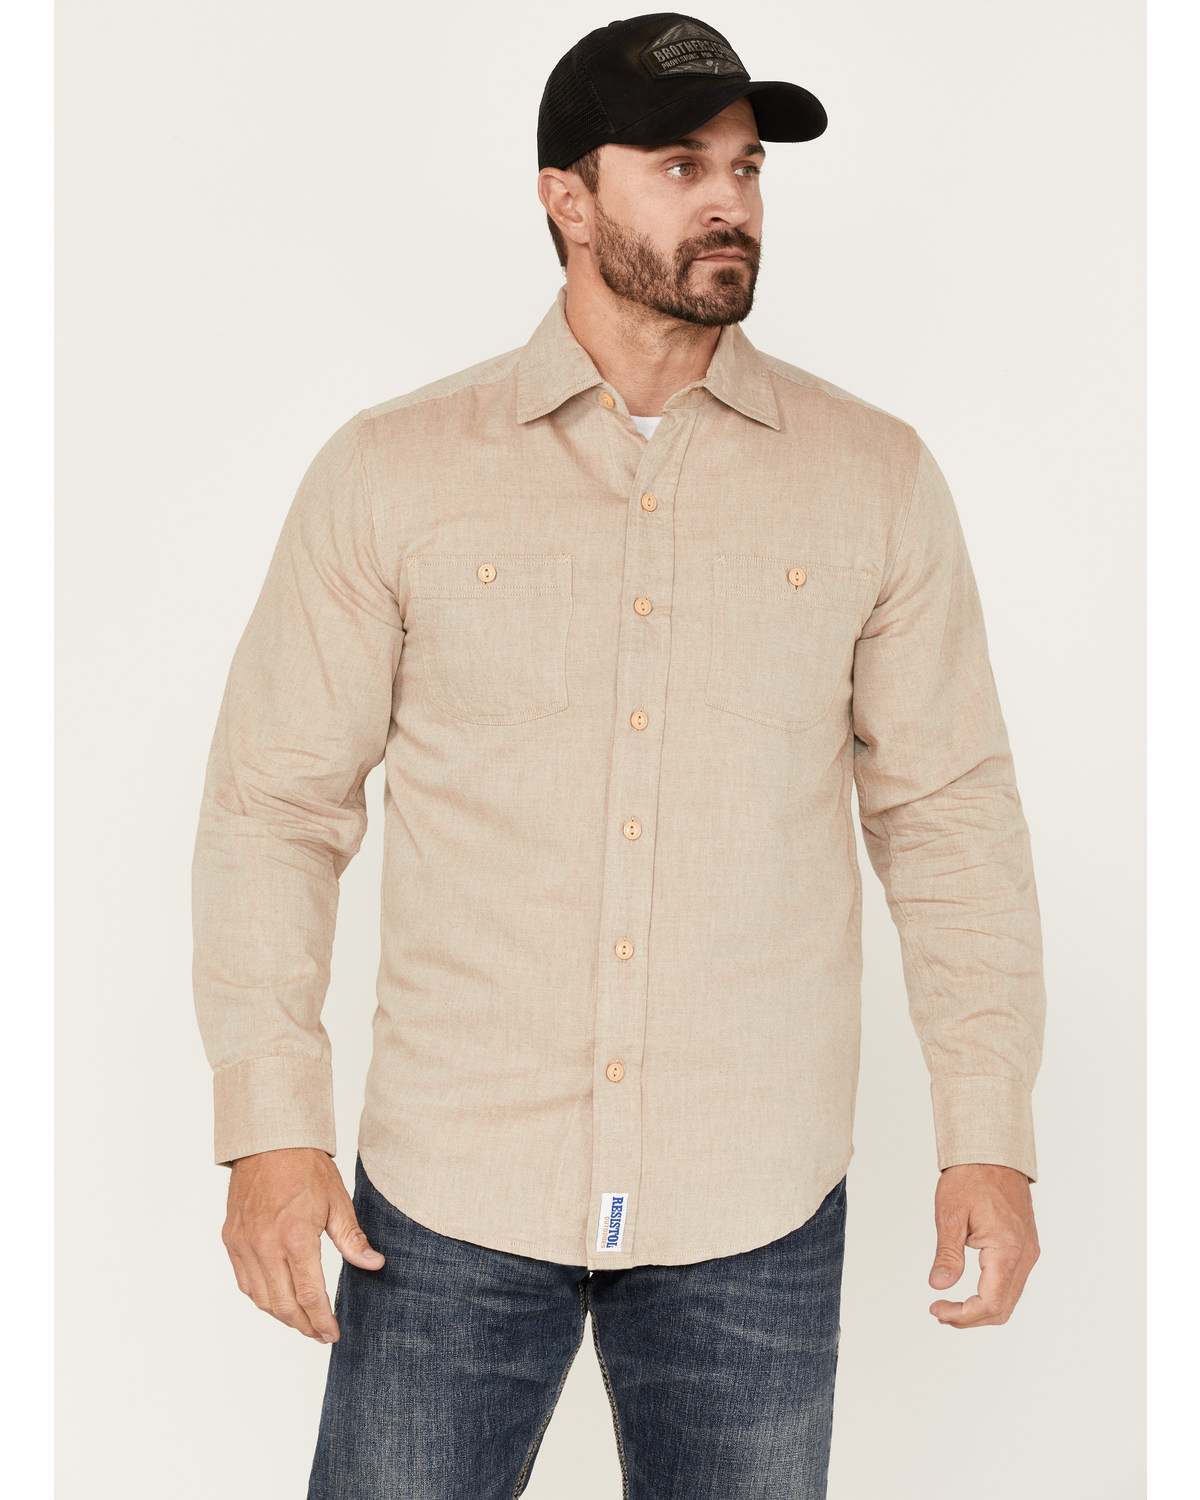 Resistol Men's Avon Dobby Solid Button Down Western Shirt